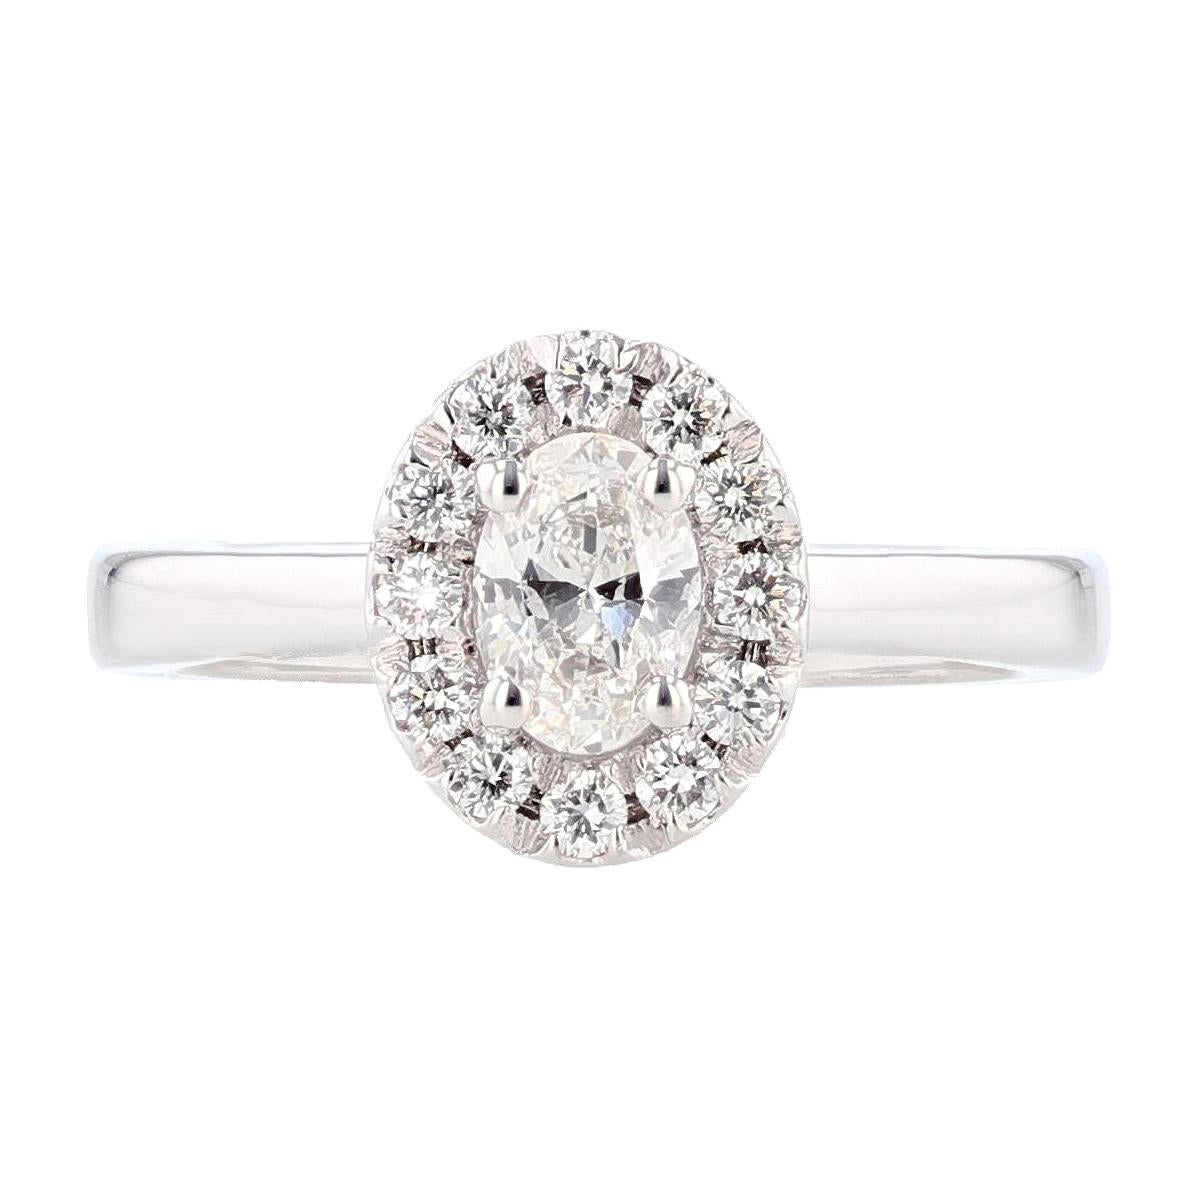 Nazarelle 14 Karat White Gold Oval Cut Diamond Engagement Ring